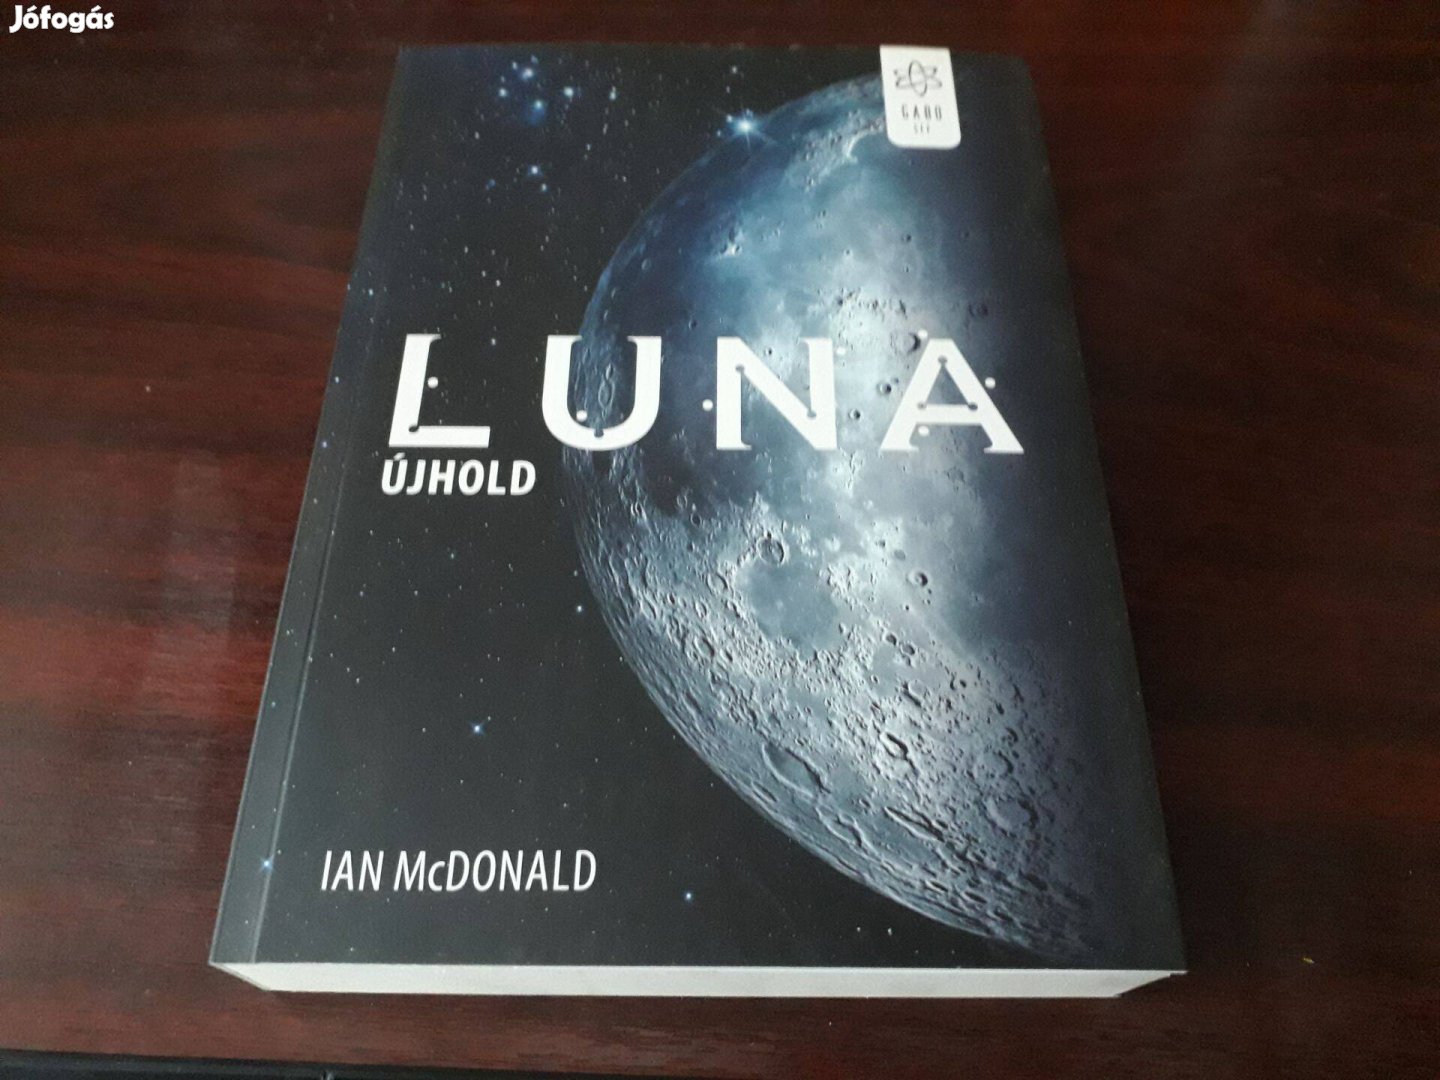 Ian McDonald - Luna (Újhold)